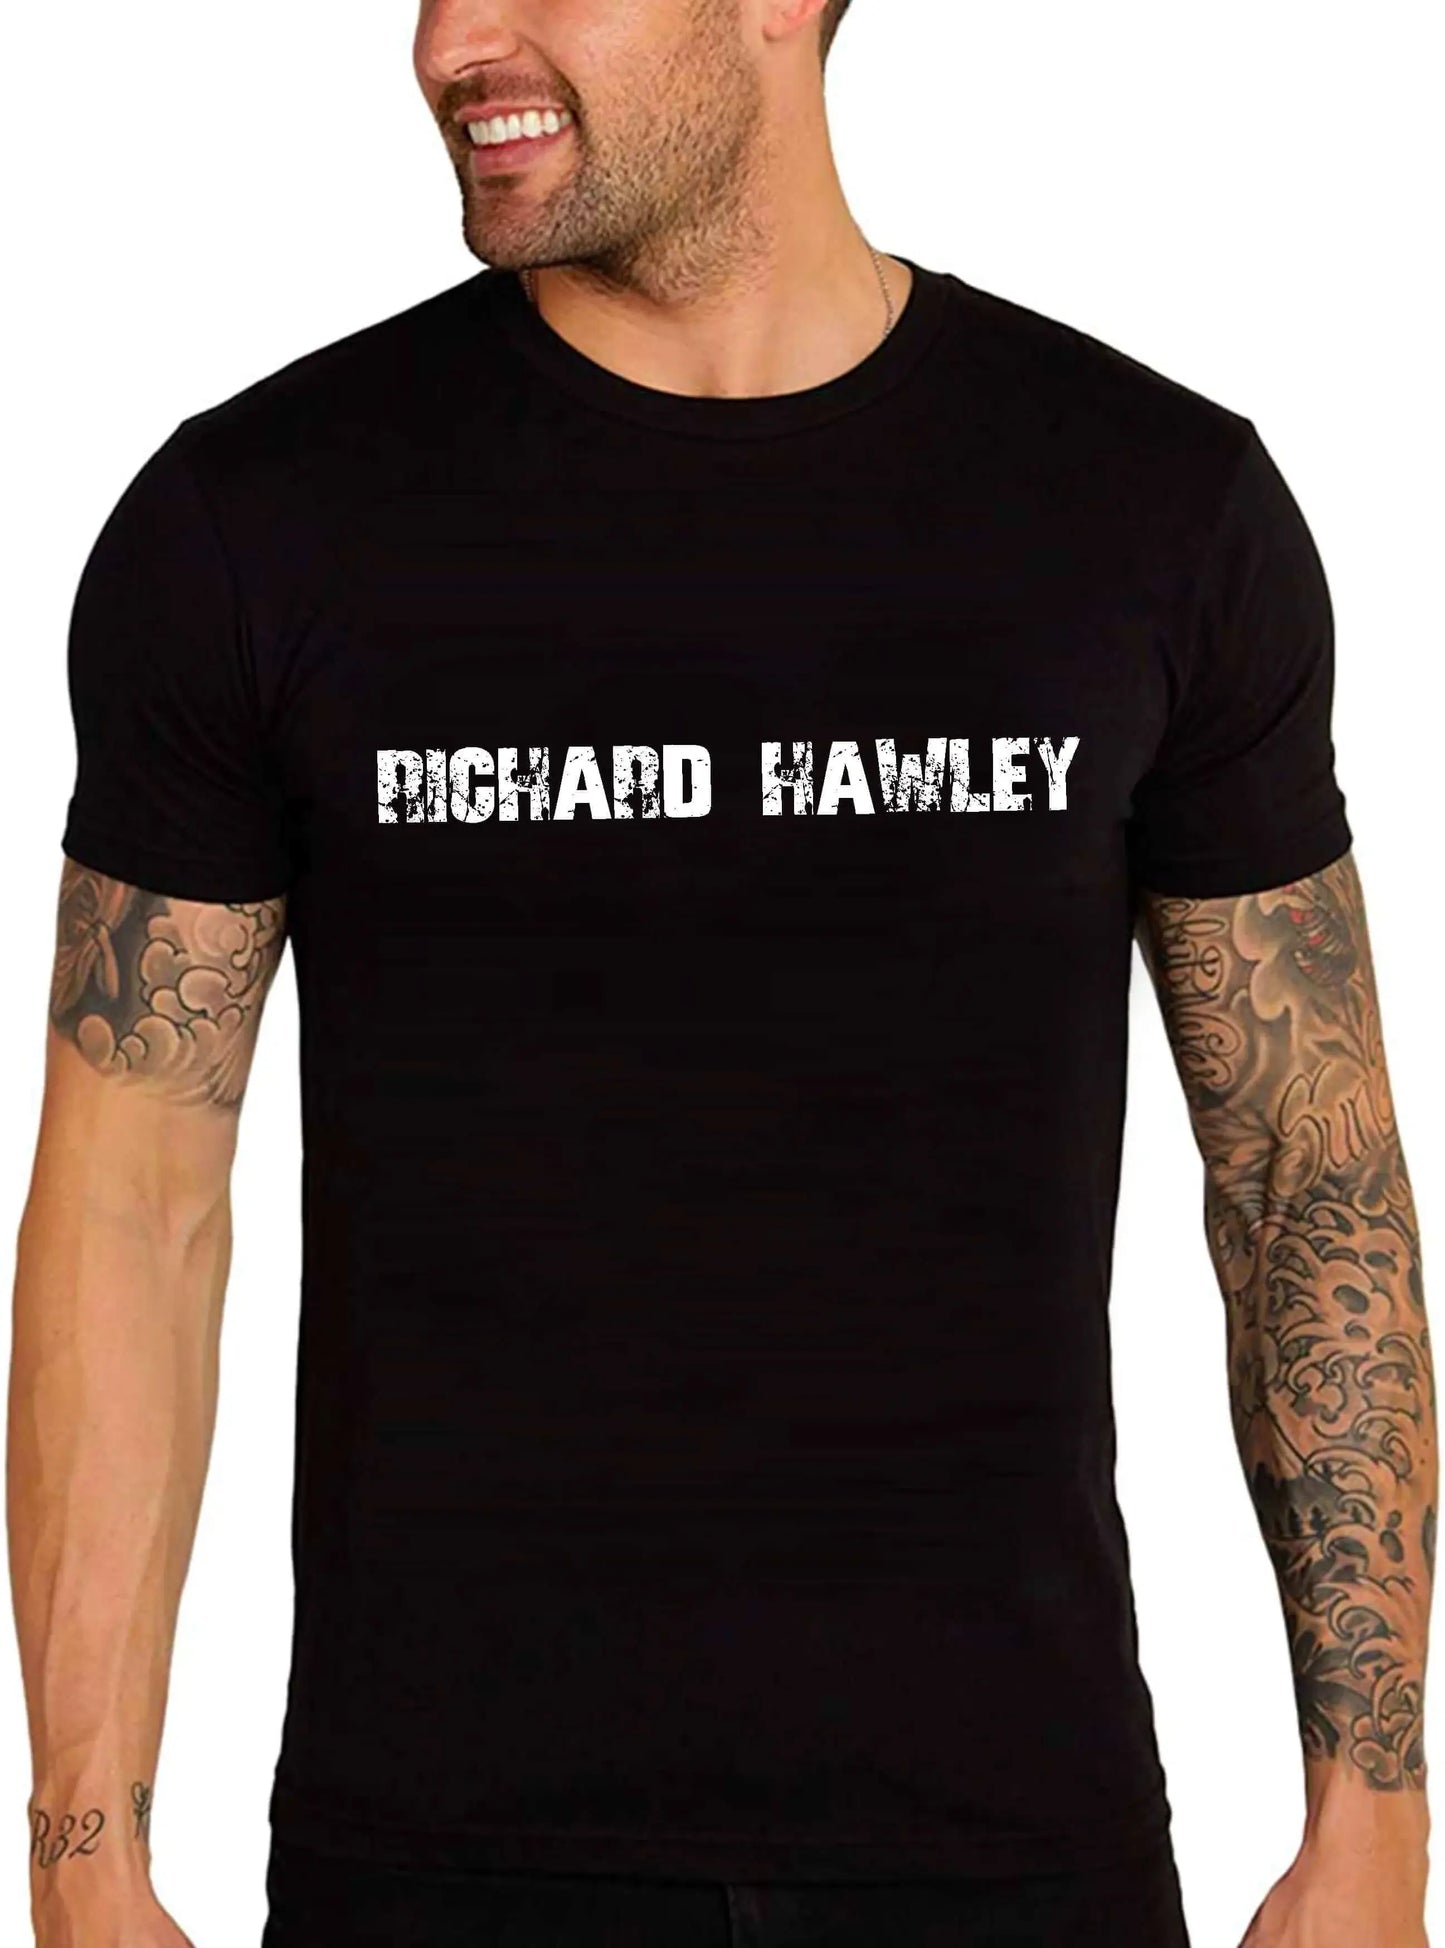 Men's Graphic T-Shirt Richard Hawley Eco-Friendly Limited Edition Short Sleeve Tee-Shirt Vintage Birthday Gift Novelty